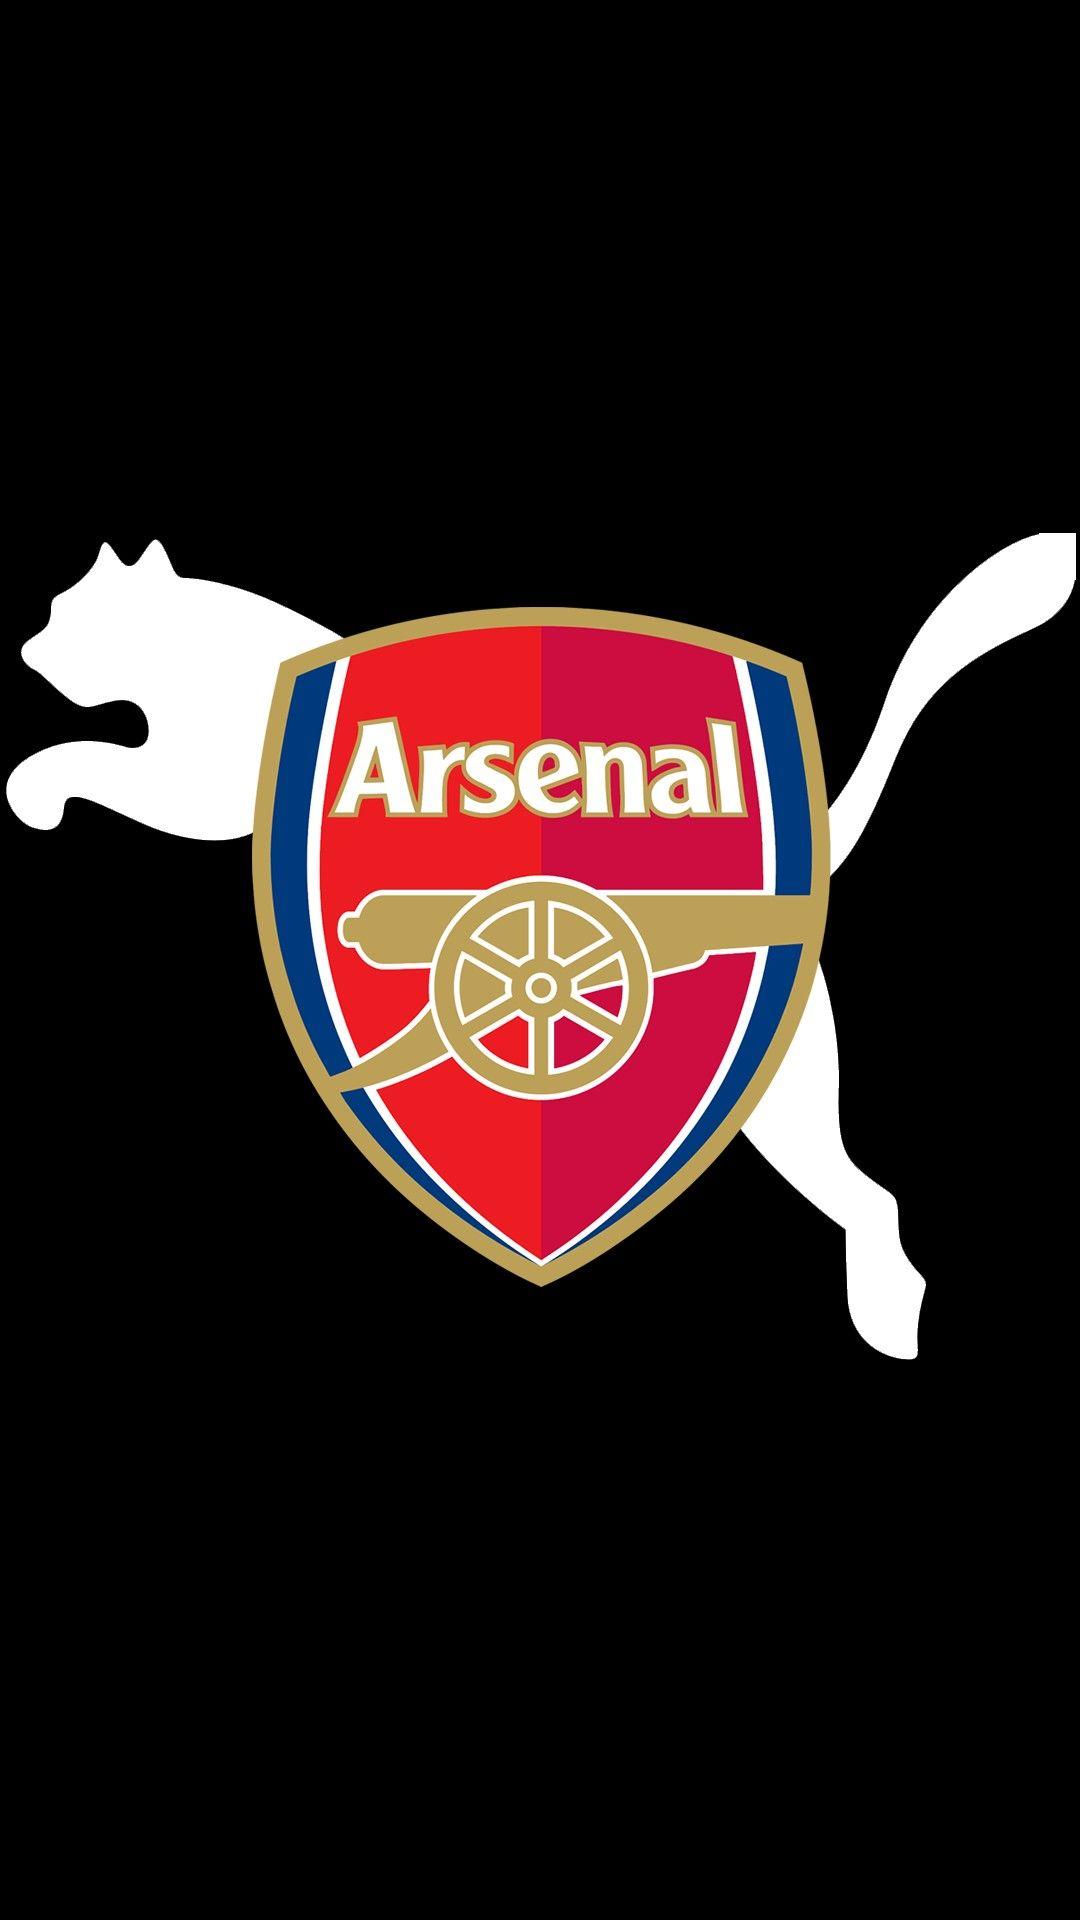 Arsenal Puma iPhone Wallpaper. Arsenal wallpaper, Team